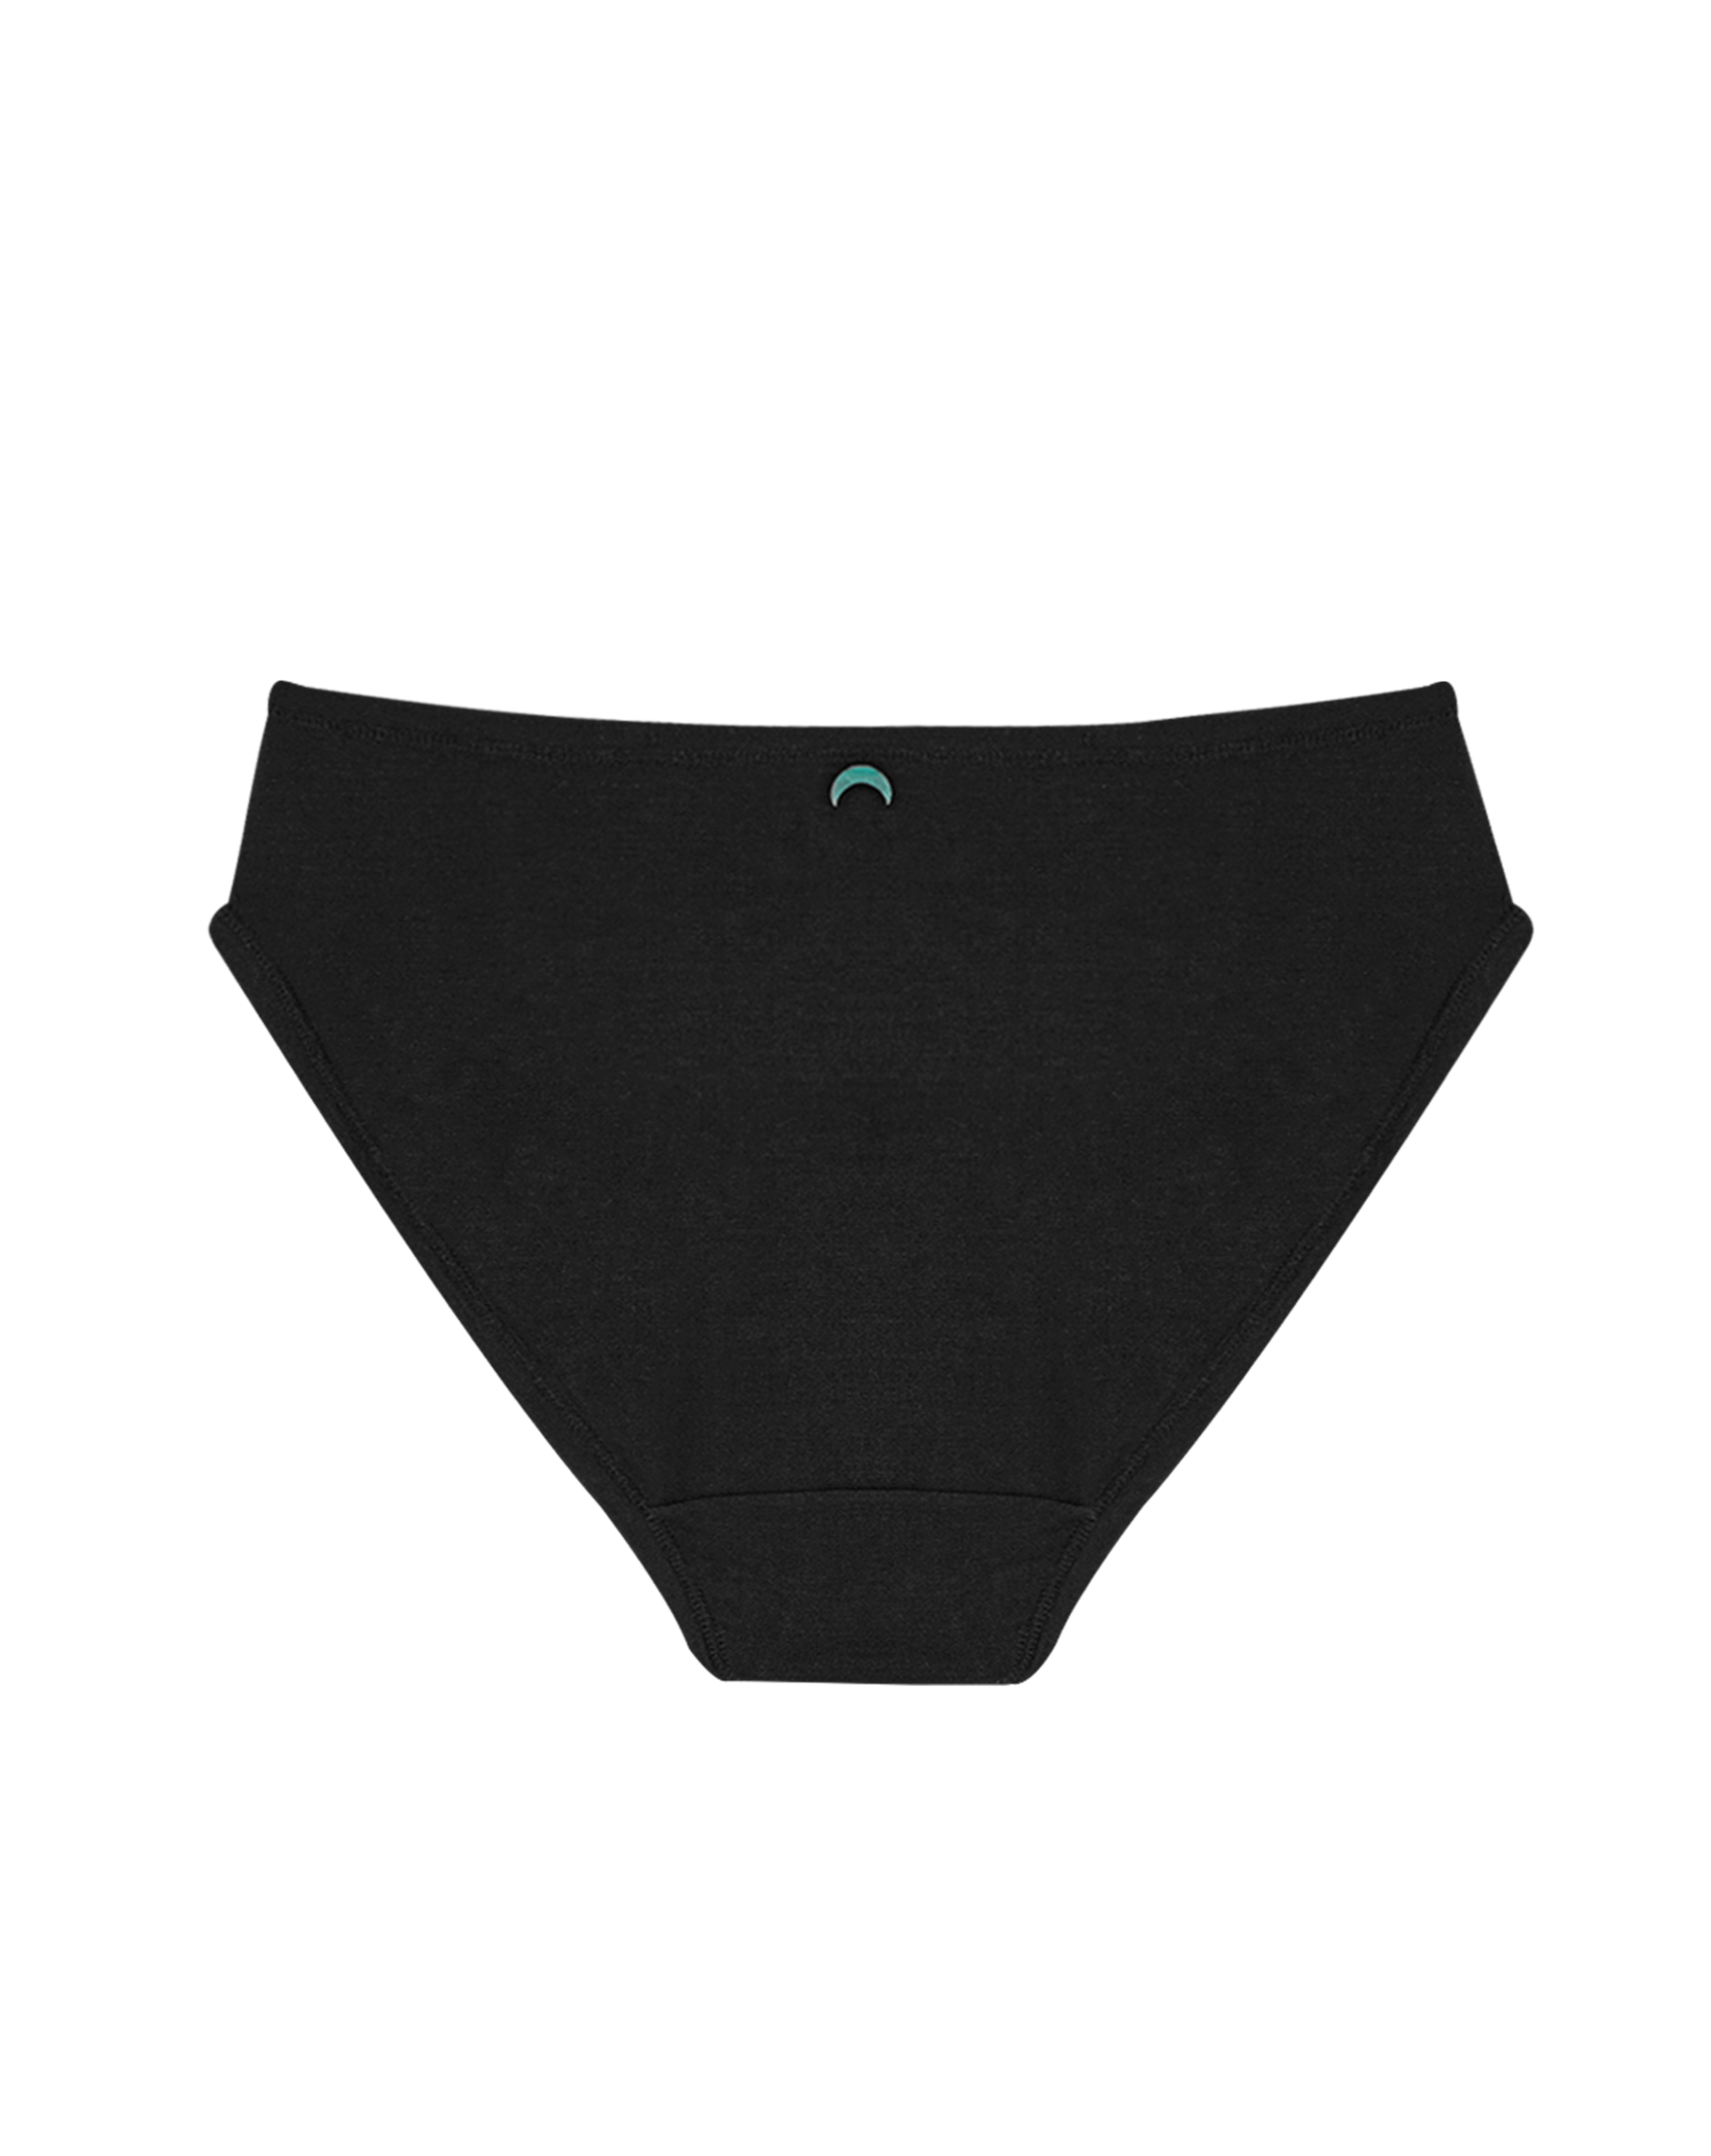 Wholesale bra size 35 For Supportive Underwear 